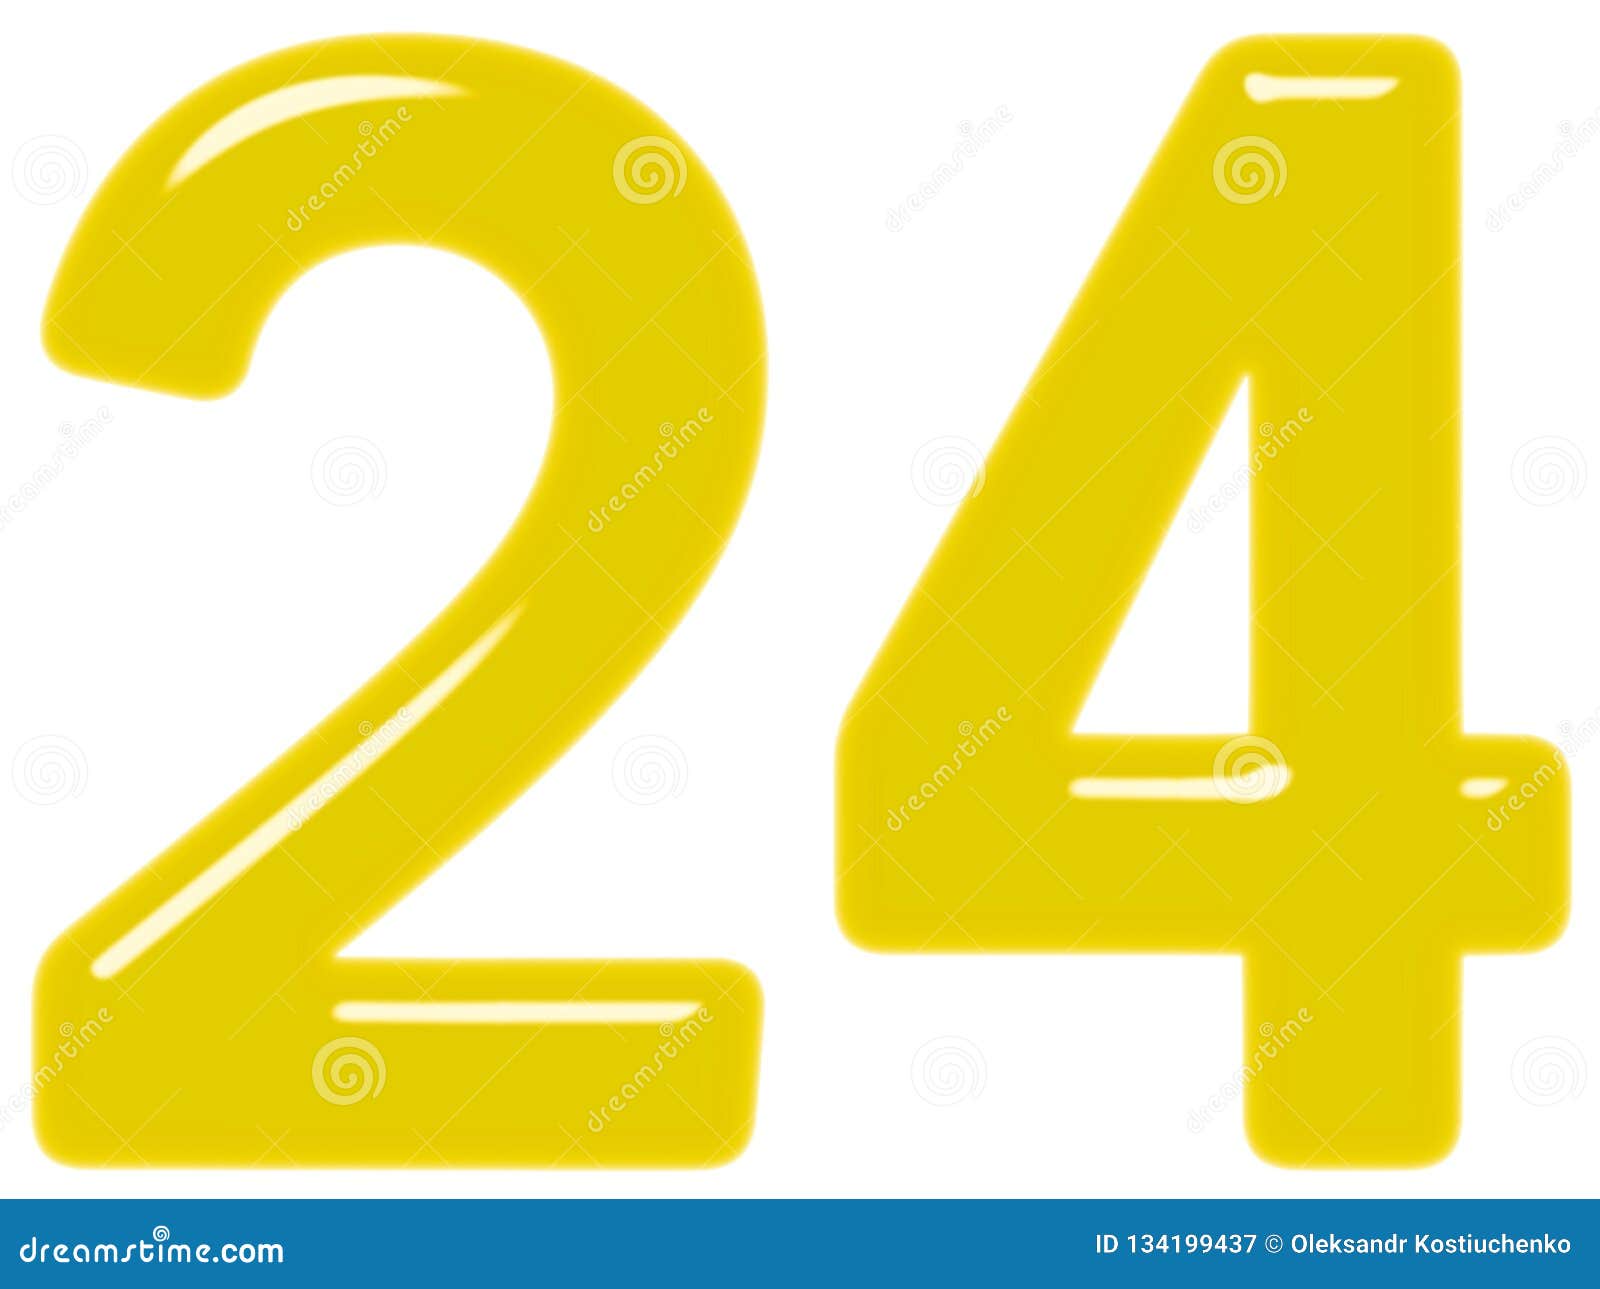 9 апреля 24 года. Цифра 24. Цифра 24 на фоне. Цифра 24 Золотая. 24 Цифры желтая.